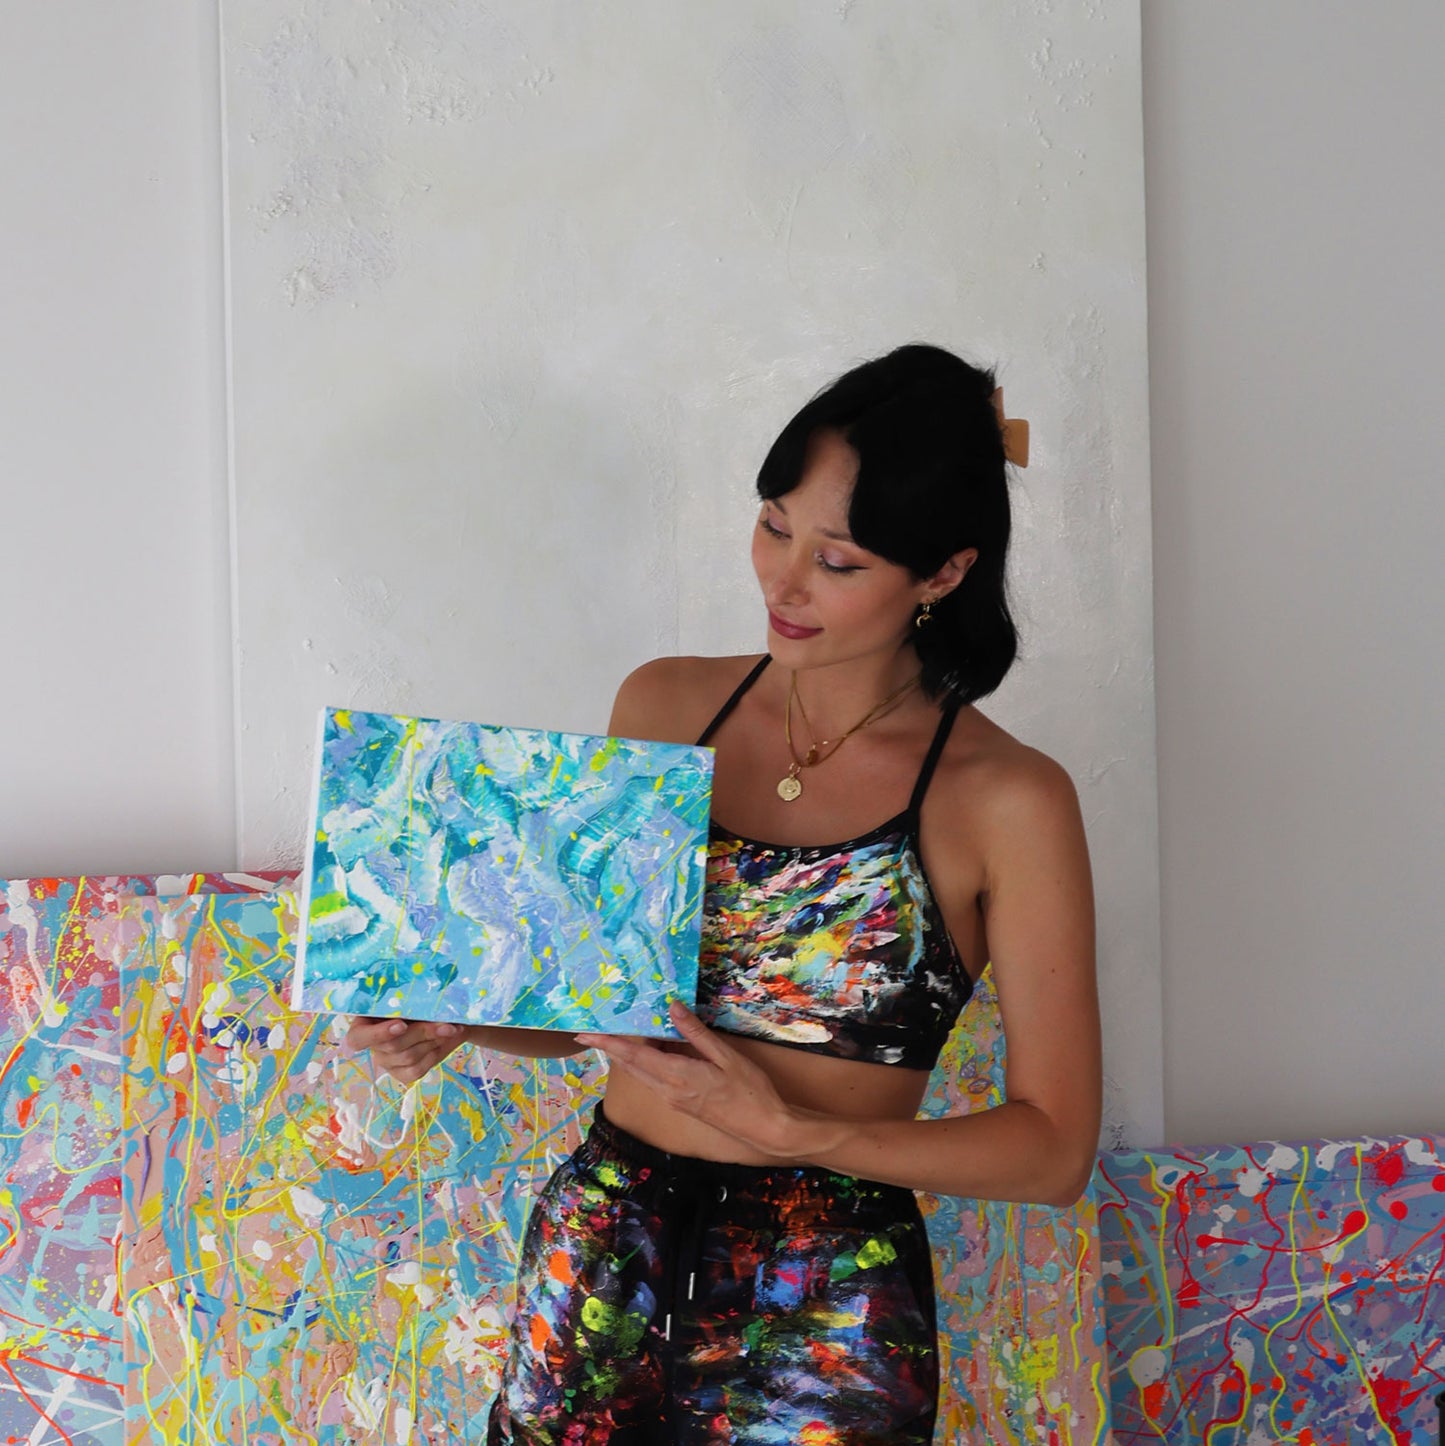 Bridget Bradley, Abstract Artist in painting gear, seen holding her original abstract painting 'Ocean'.